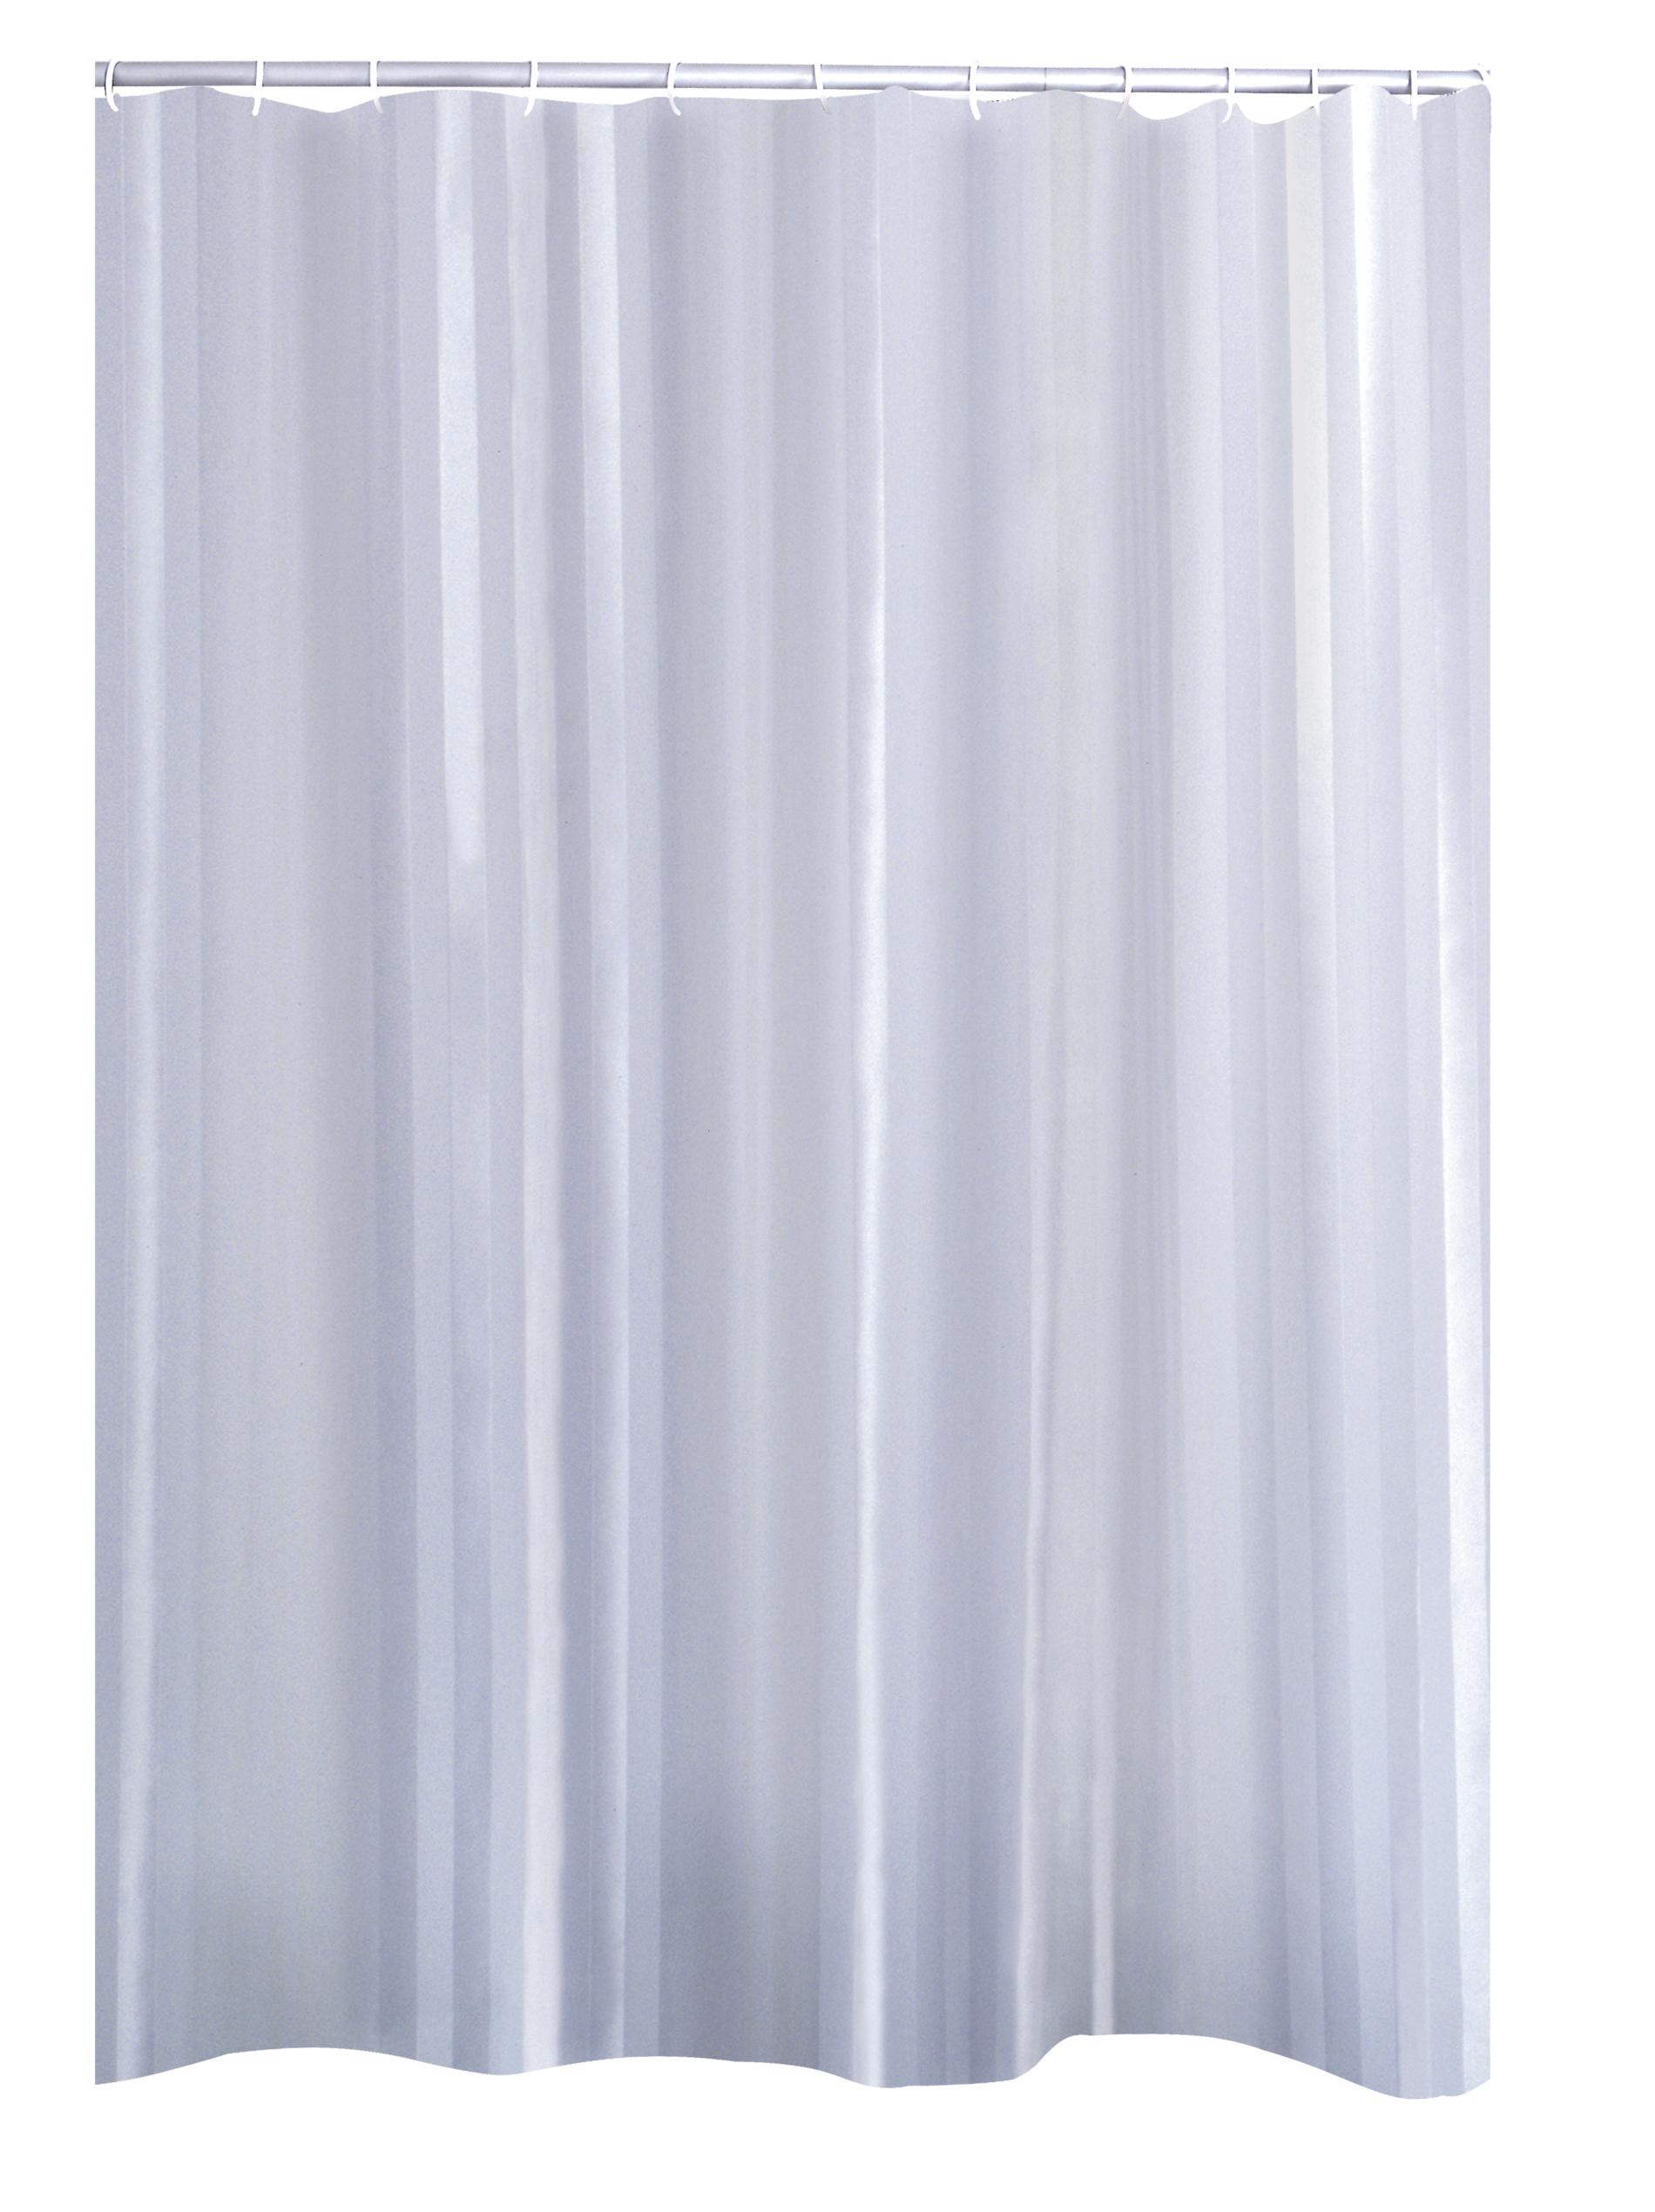 RIDDER Duschvorhang Textil Satin 180x200 cm weiß Textilvorhang Polyestervorhang 